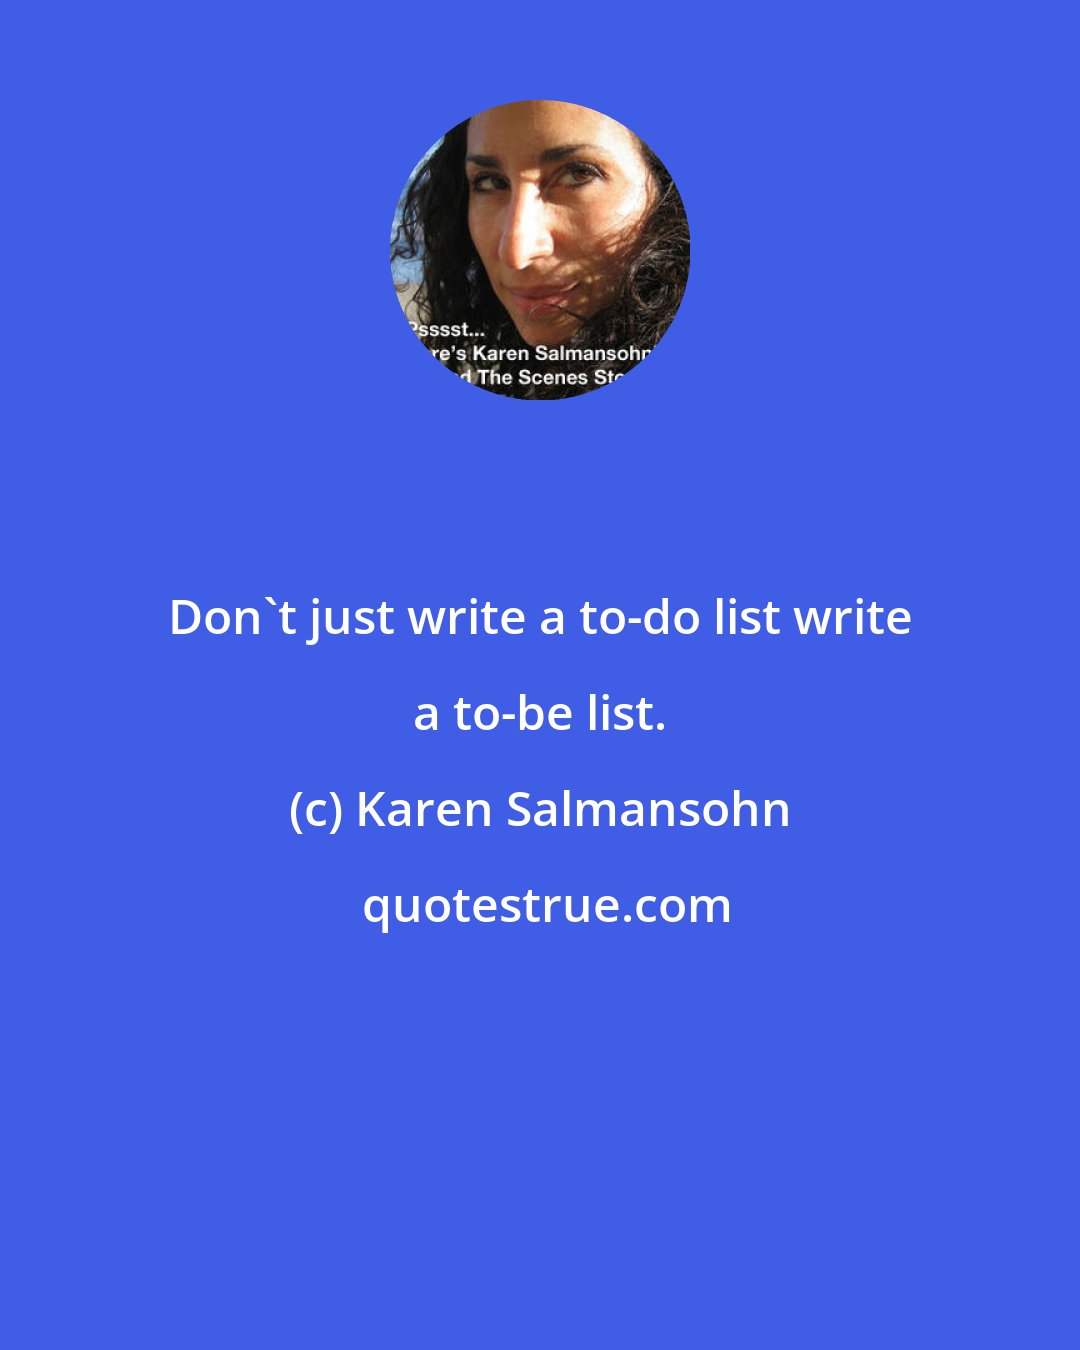 Karen Salmansohn: Don't just write a to-do list write a to-be list.